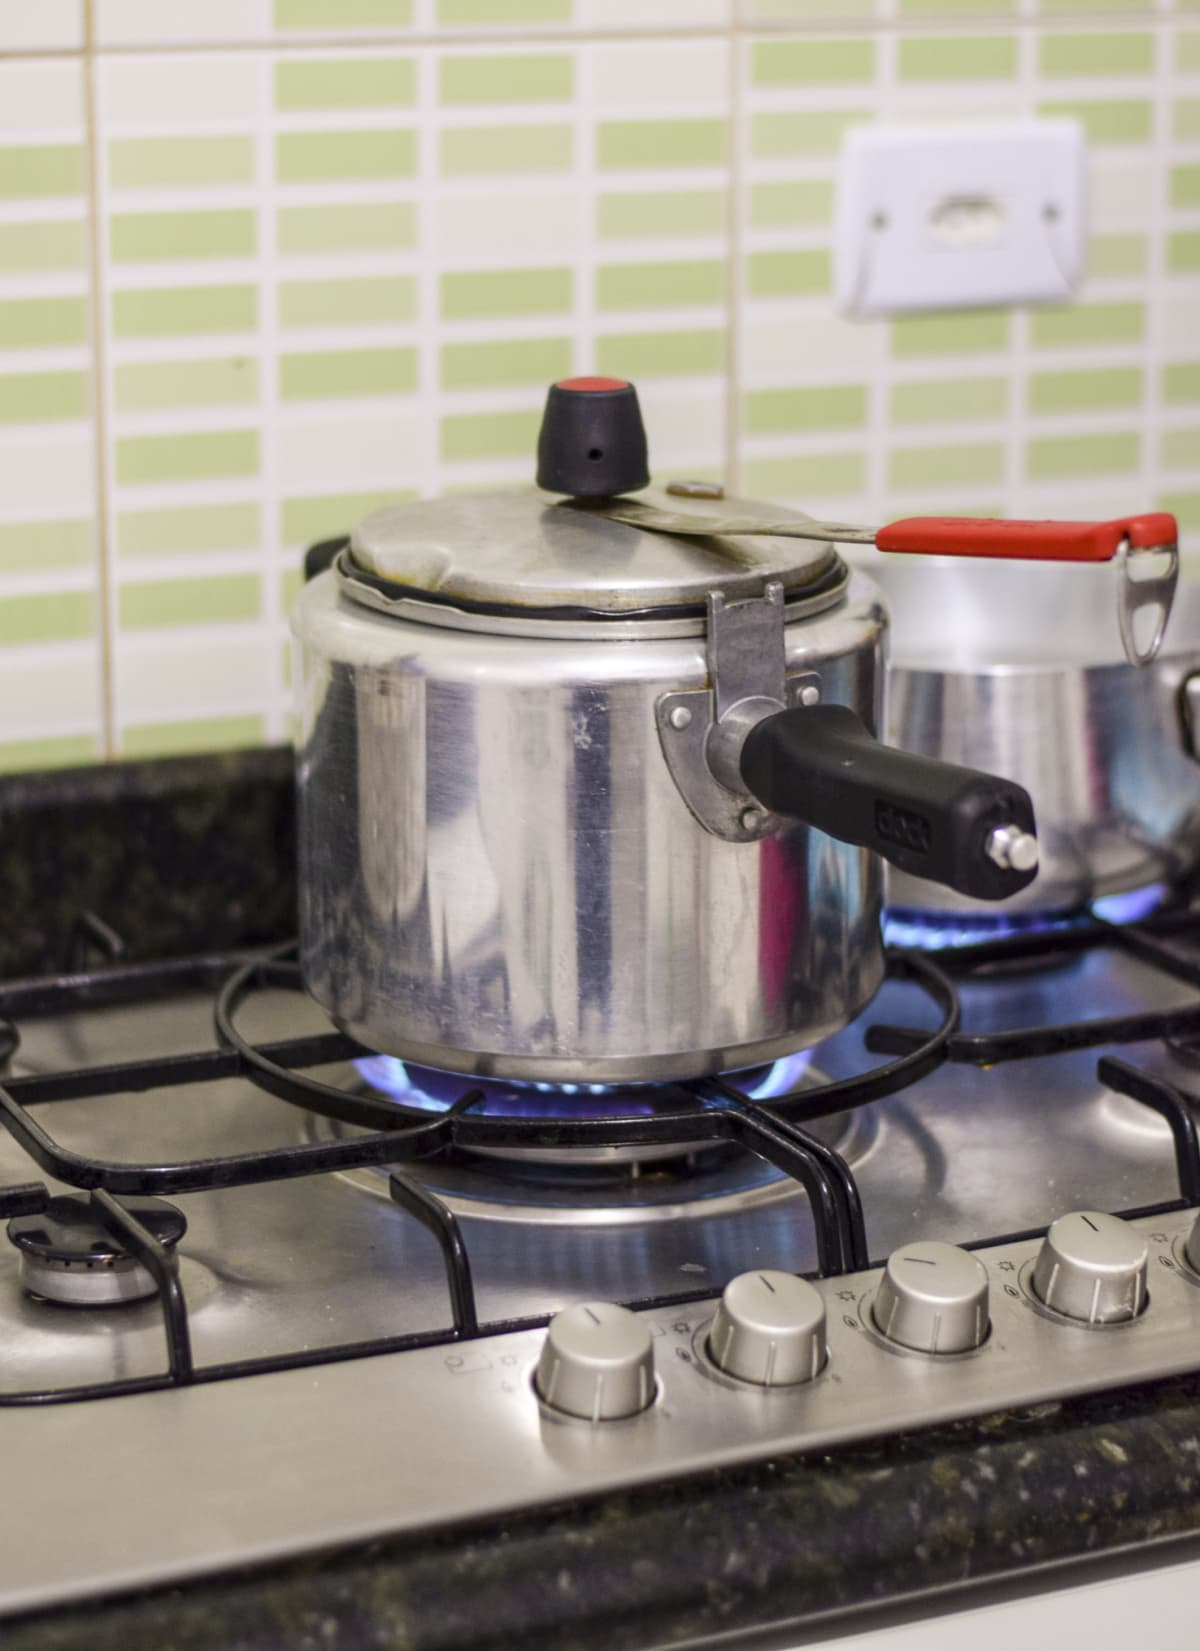 Pressure cooker on a gas stove burner